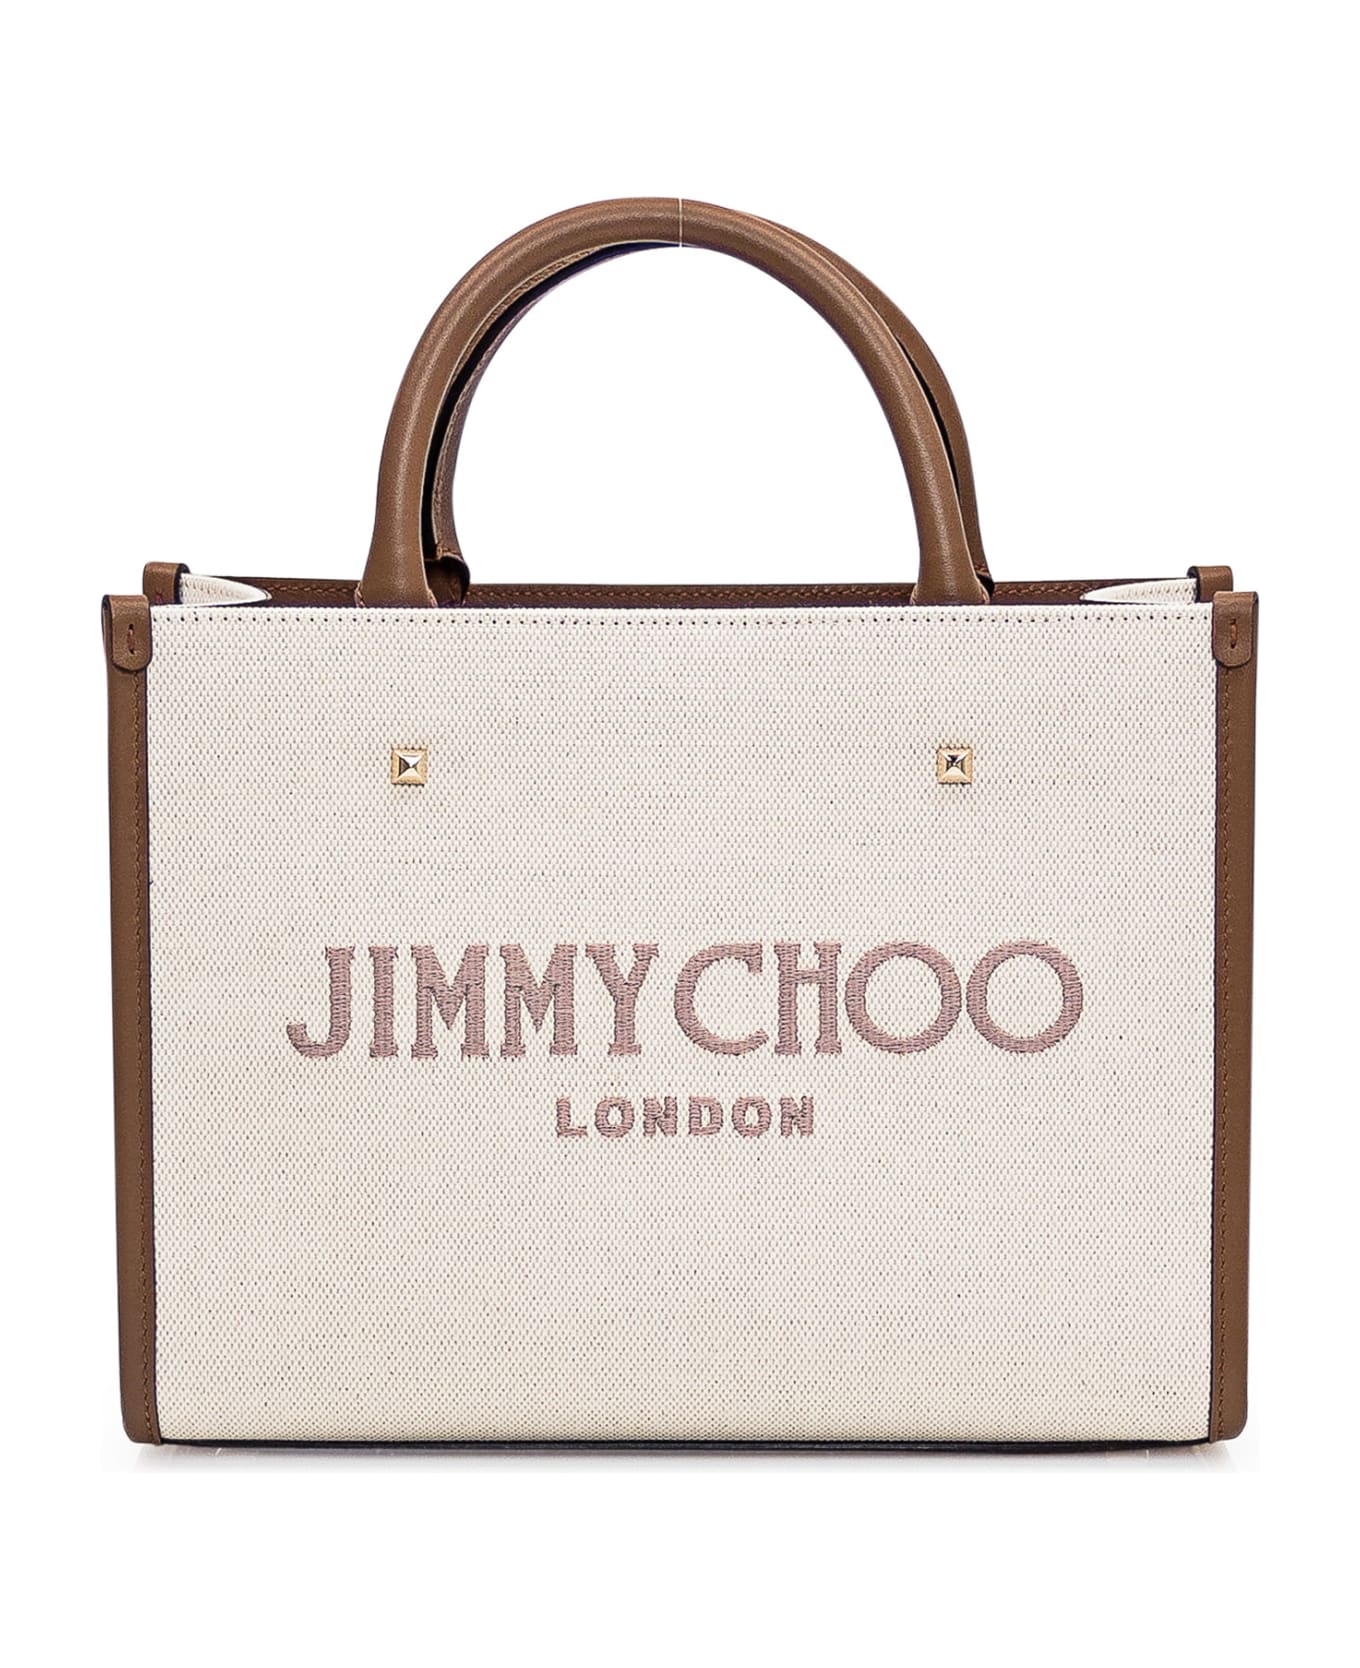 Jimmy Choo Avenue S Tote Bag - NATURAL/TAUPE/DARK TAN/LIGHT GOLD